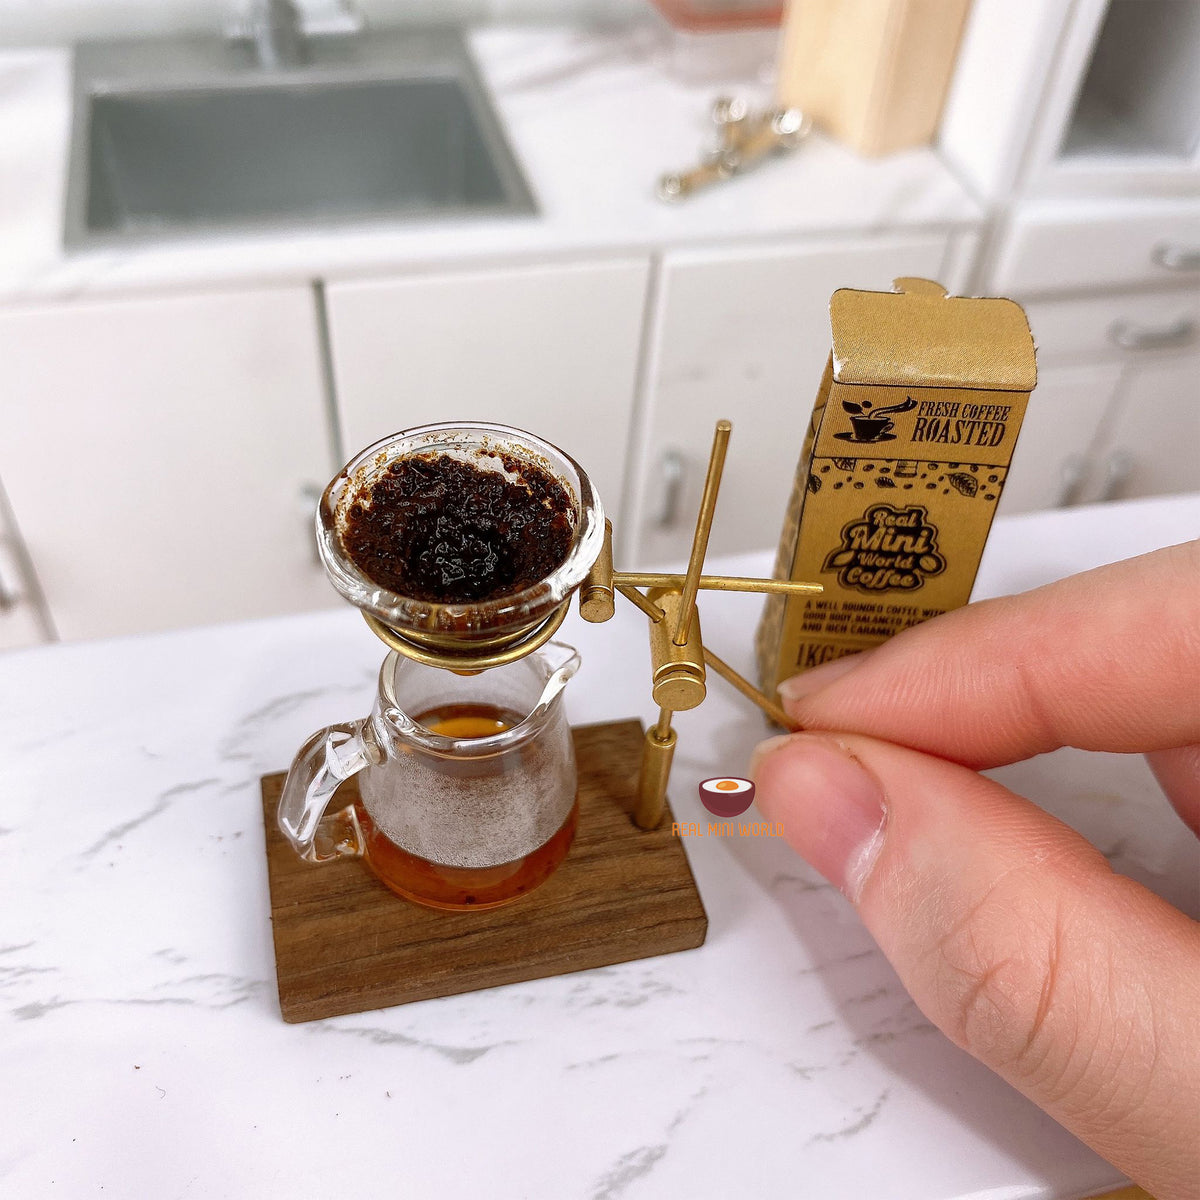 Real working miniature coffee drip maker: mini cooking coffee brewing